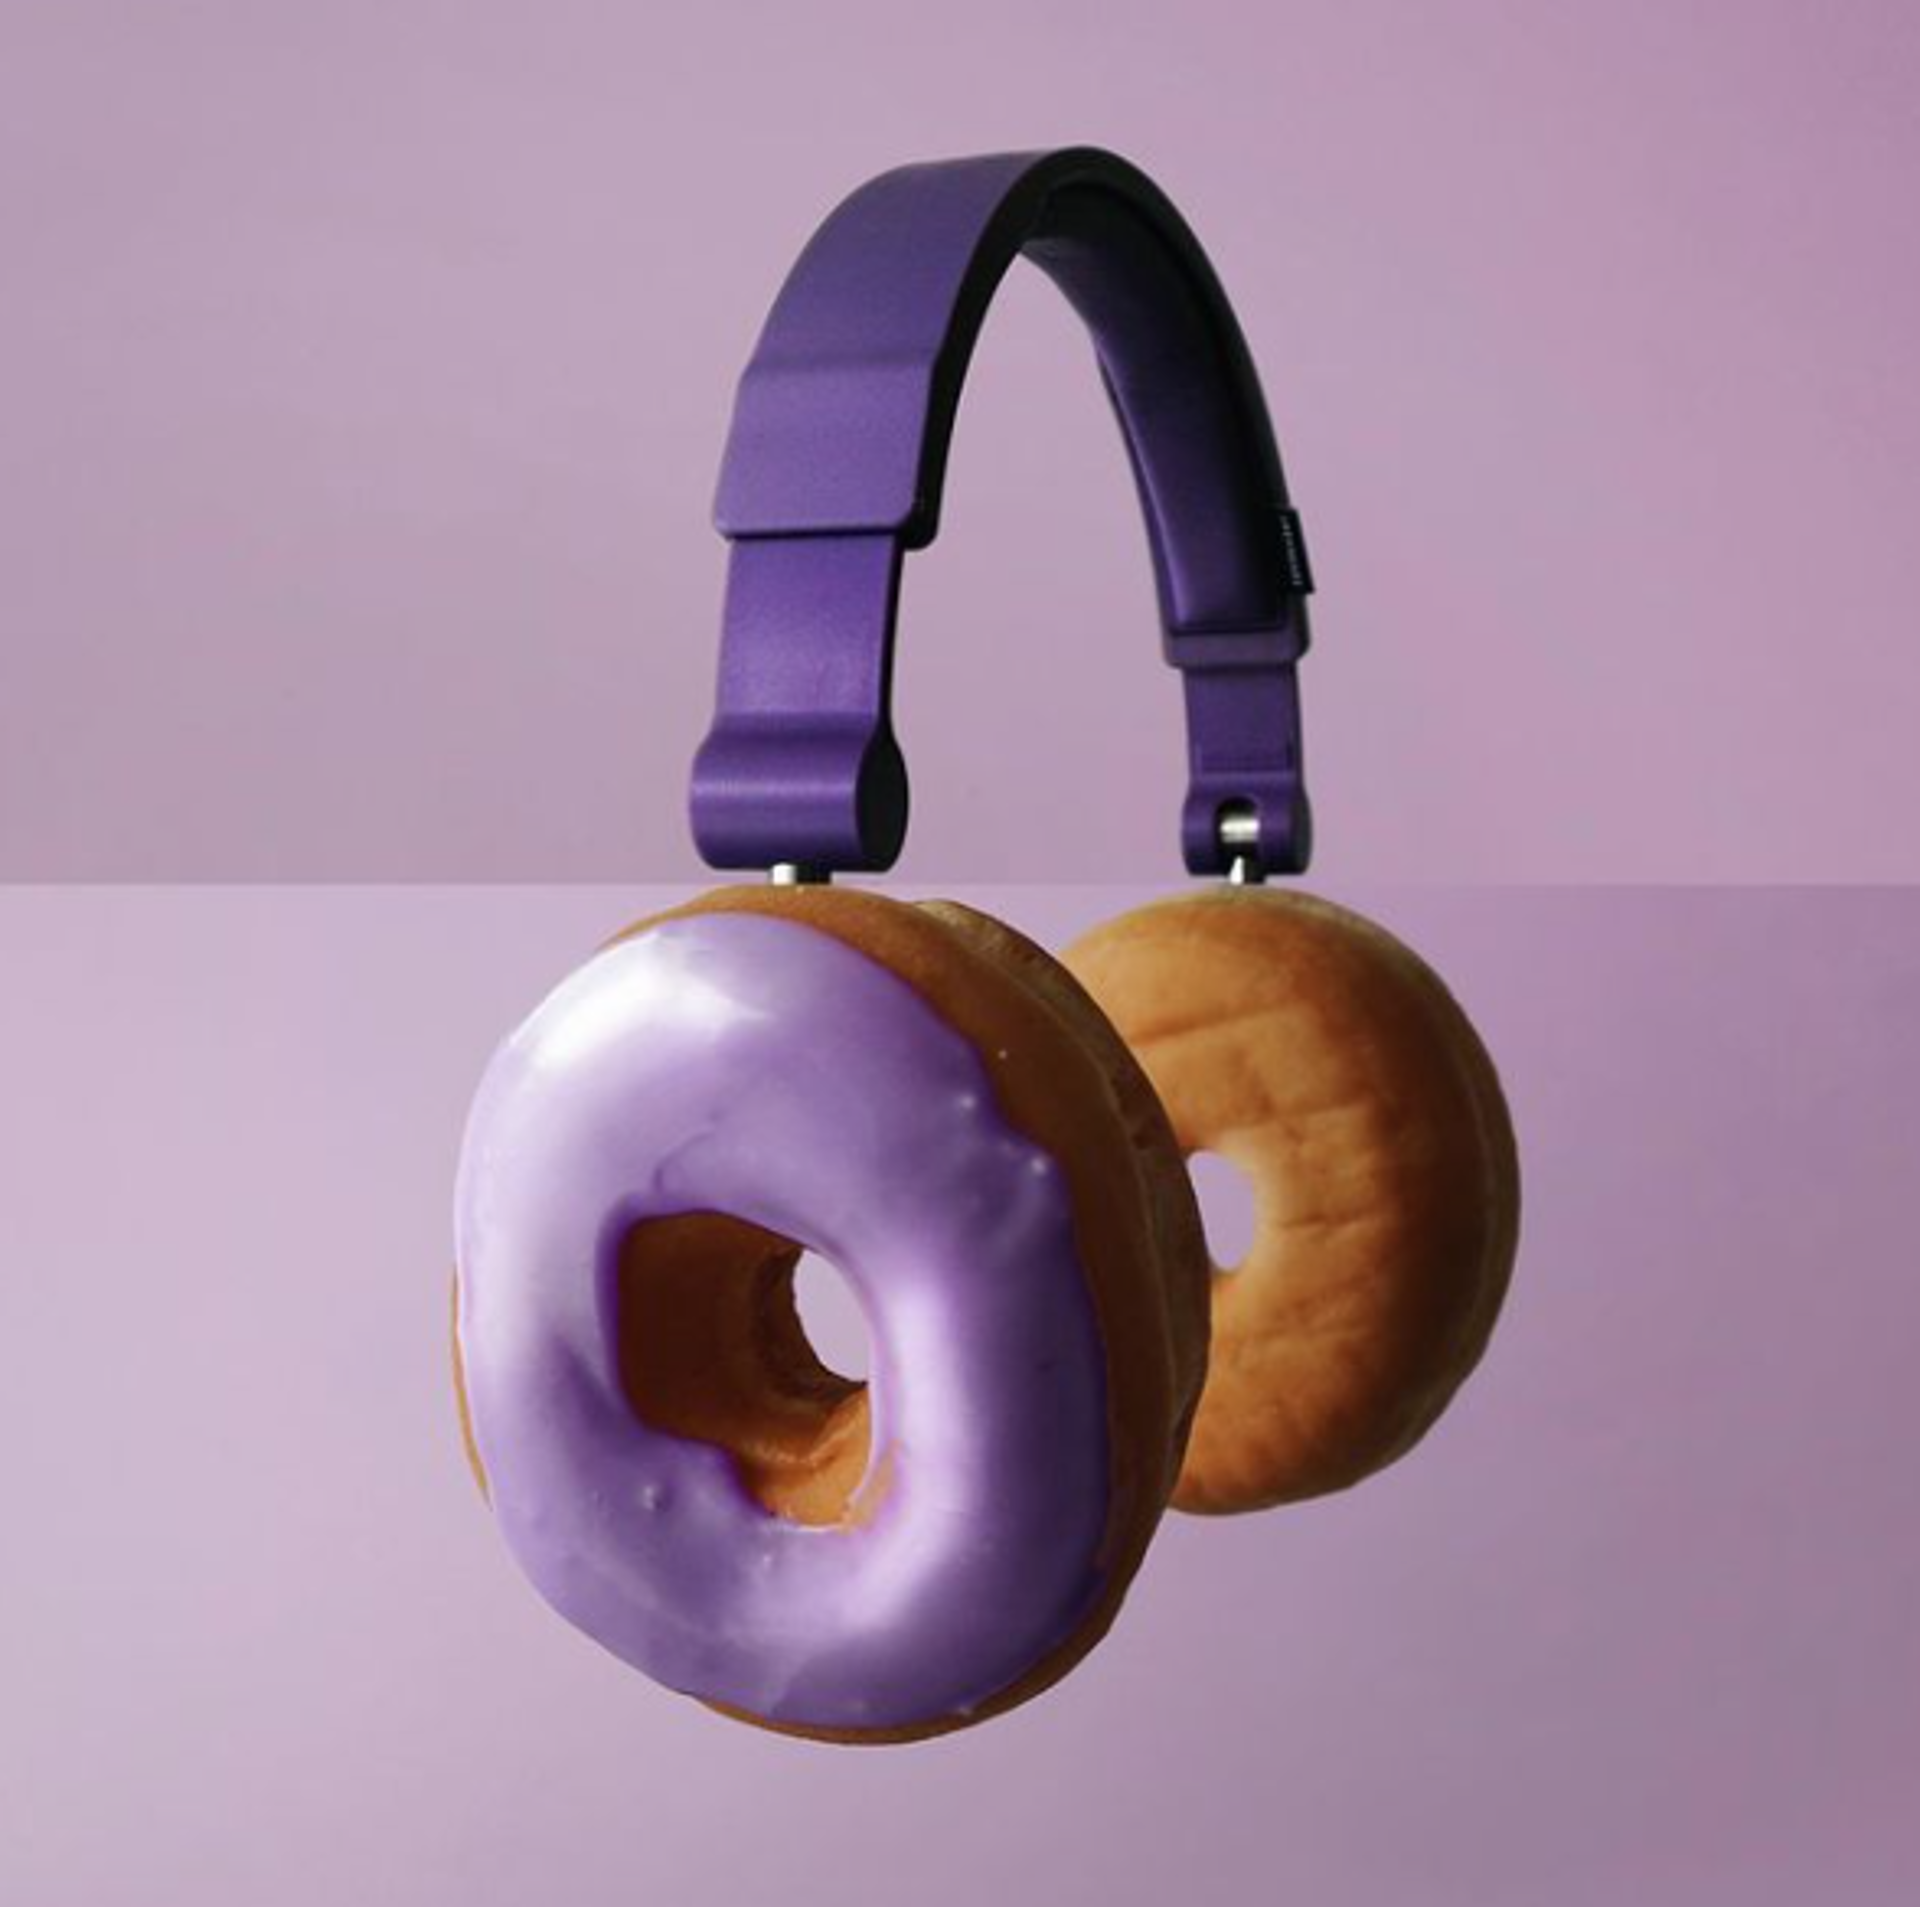 Donut + Headphones by Stephen McMennamy